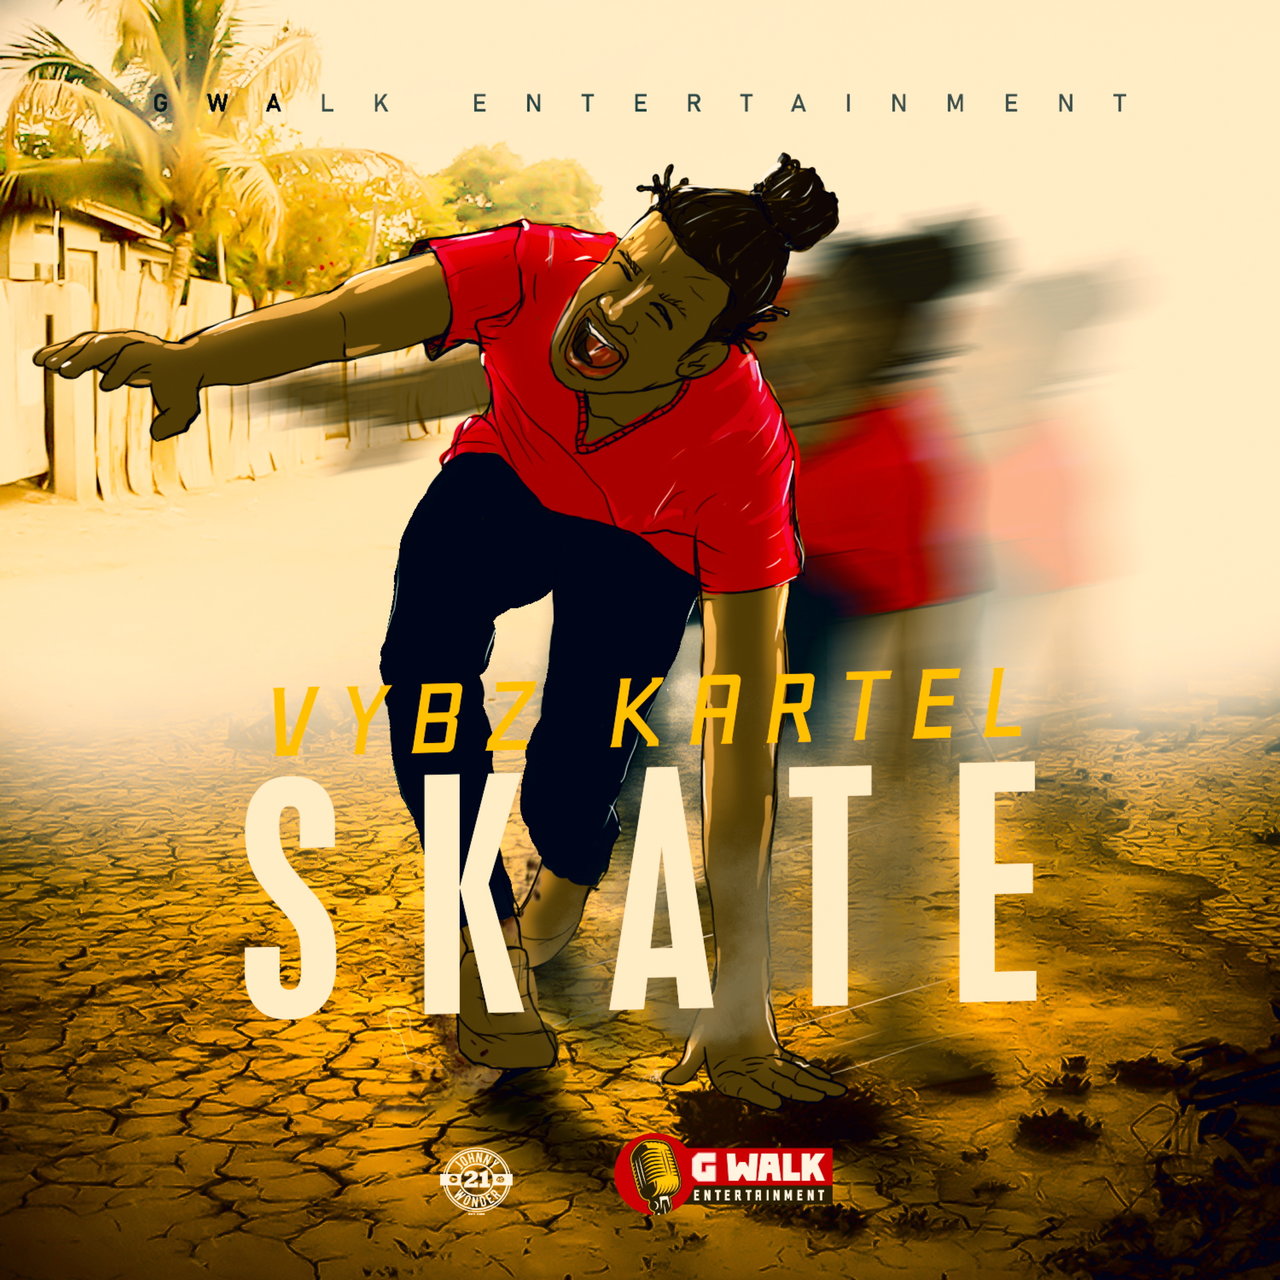 Vybz Kartel - Skate (Cover)